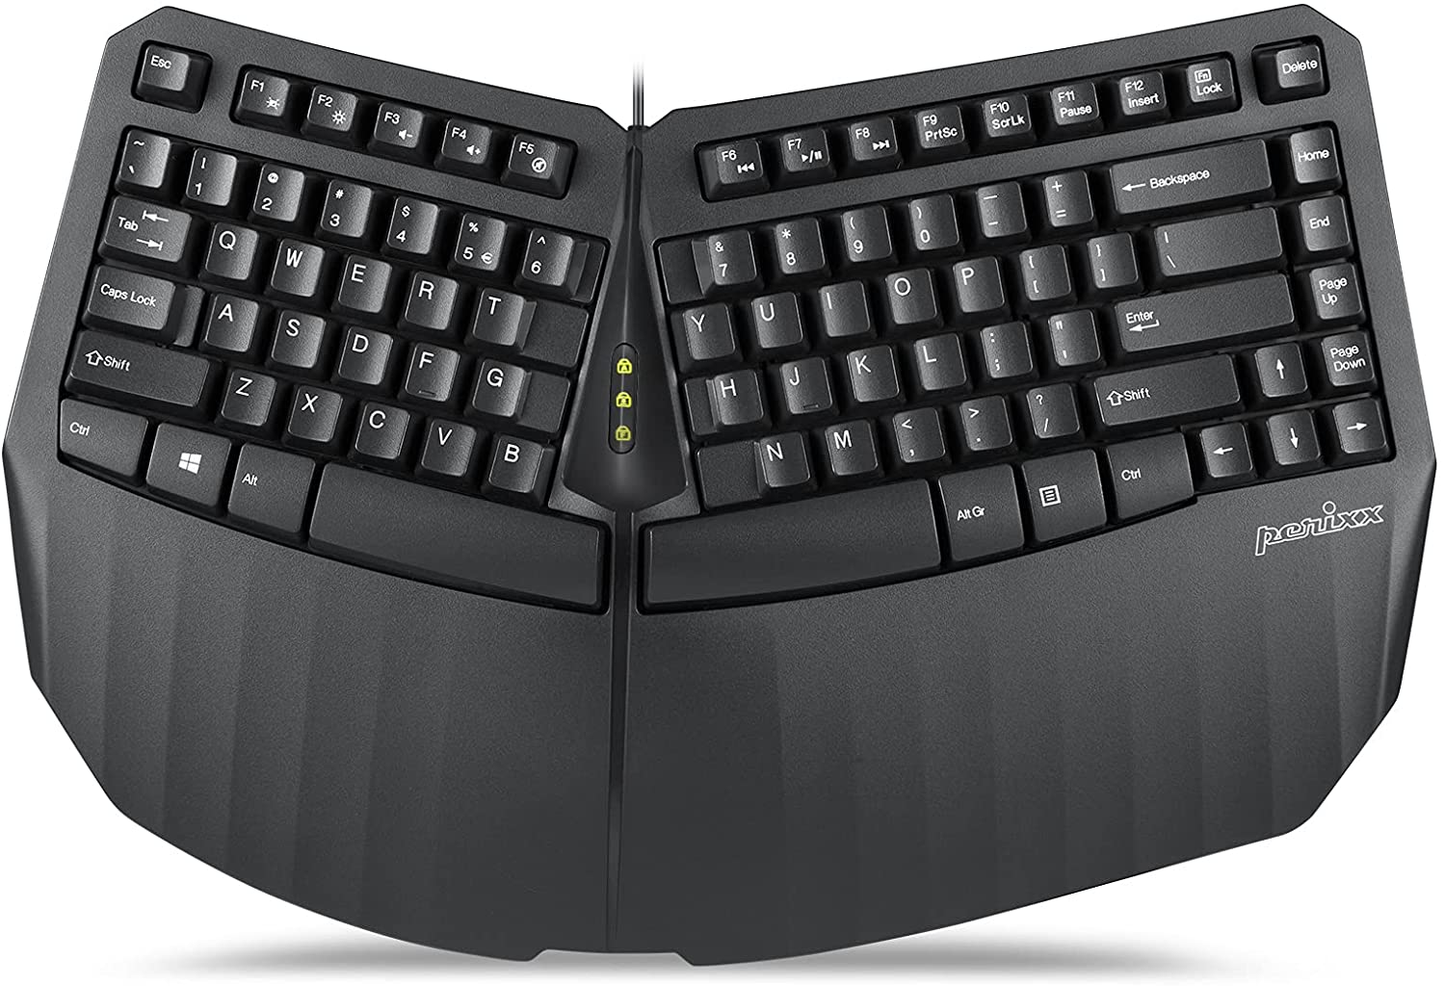 Perix Wired USB Ergonomic Compact Split Keyboard - 15.75X10.83X2.17 Inches TKL Design - Black - US English